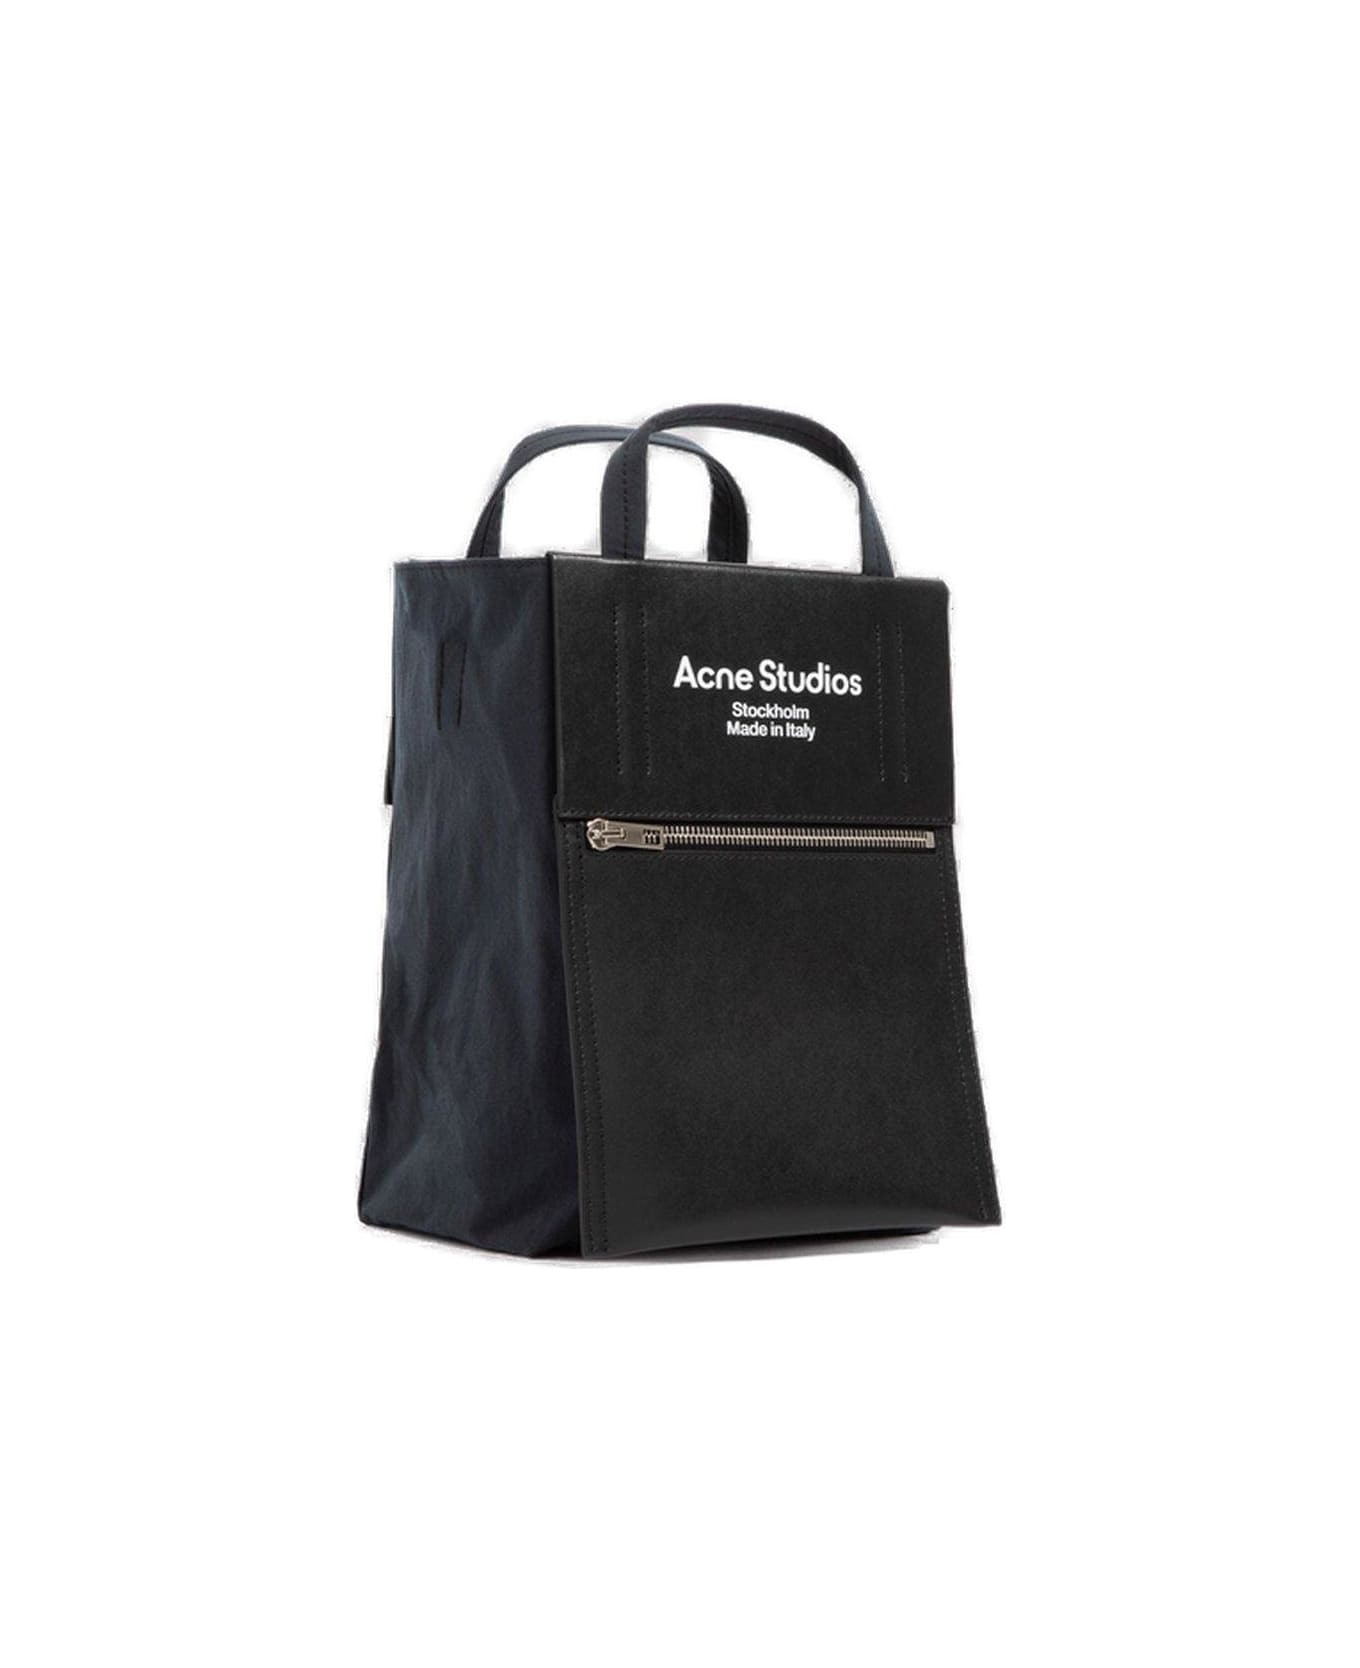 Acne Studios Papery Logo Printed Small Tote Bag - Black/black